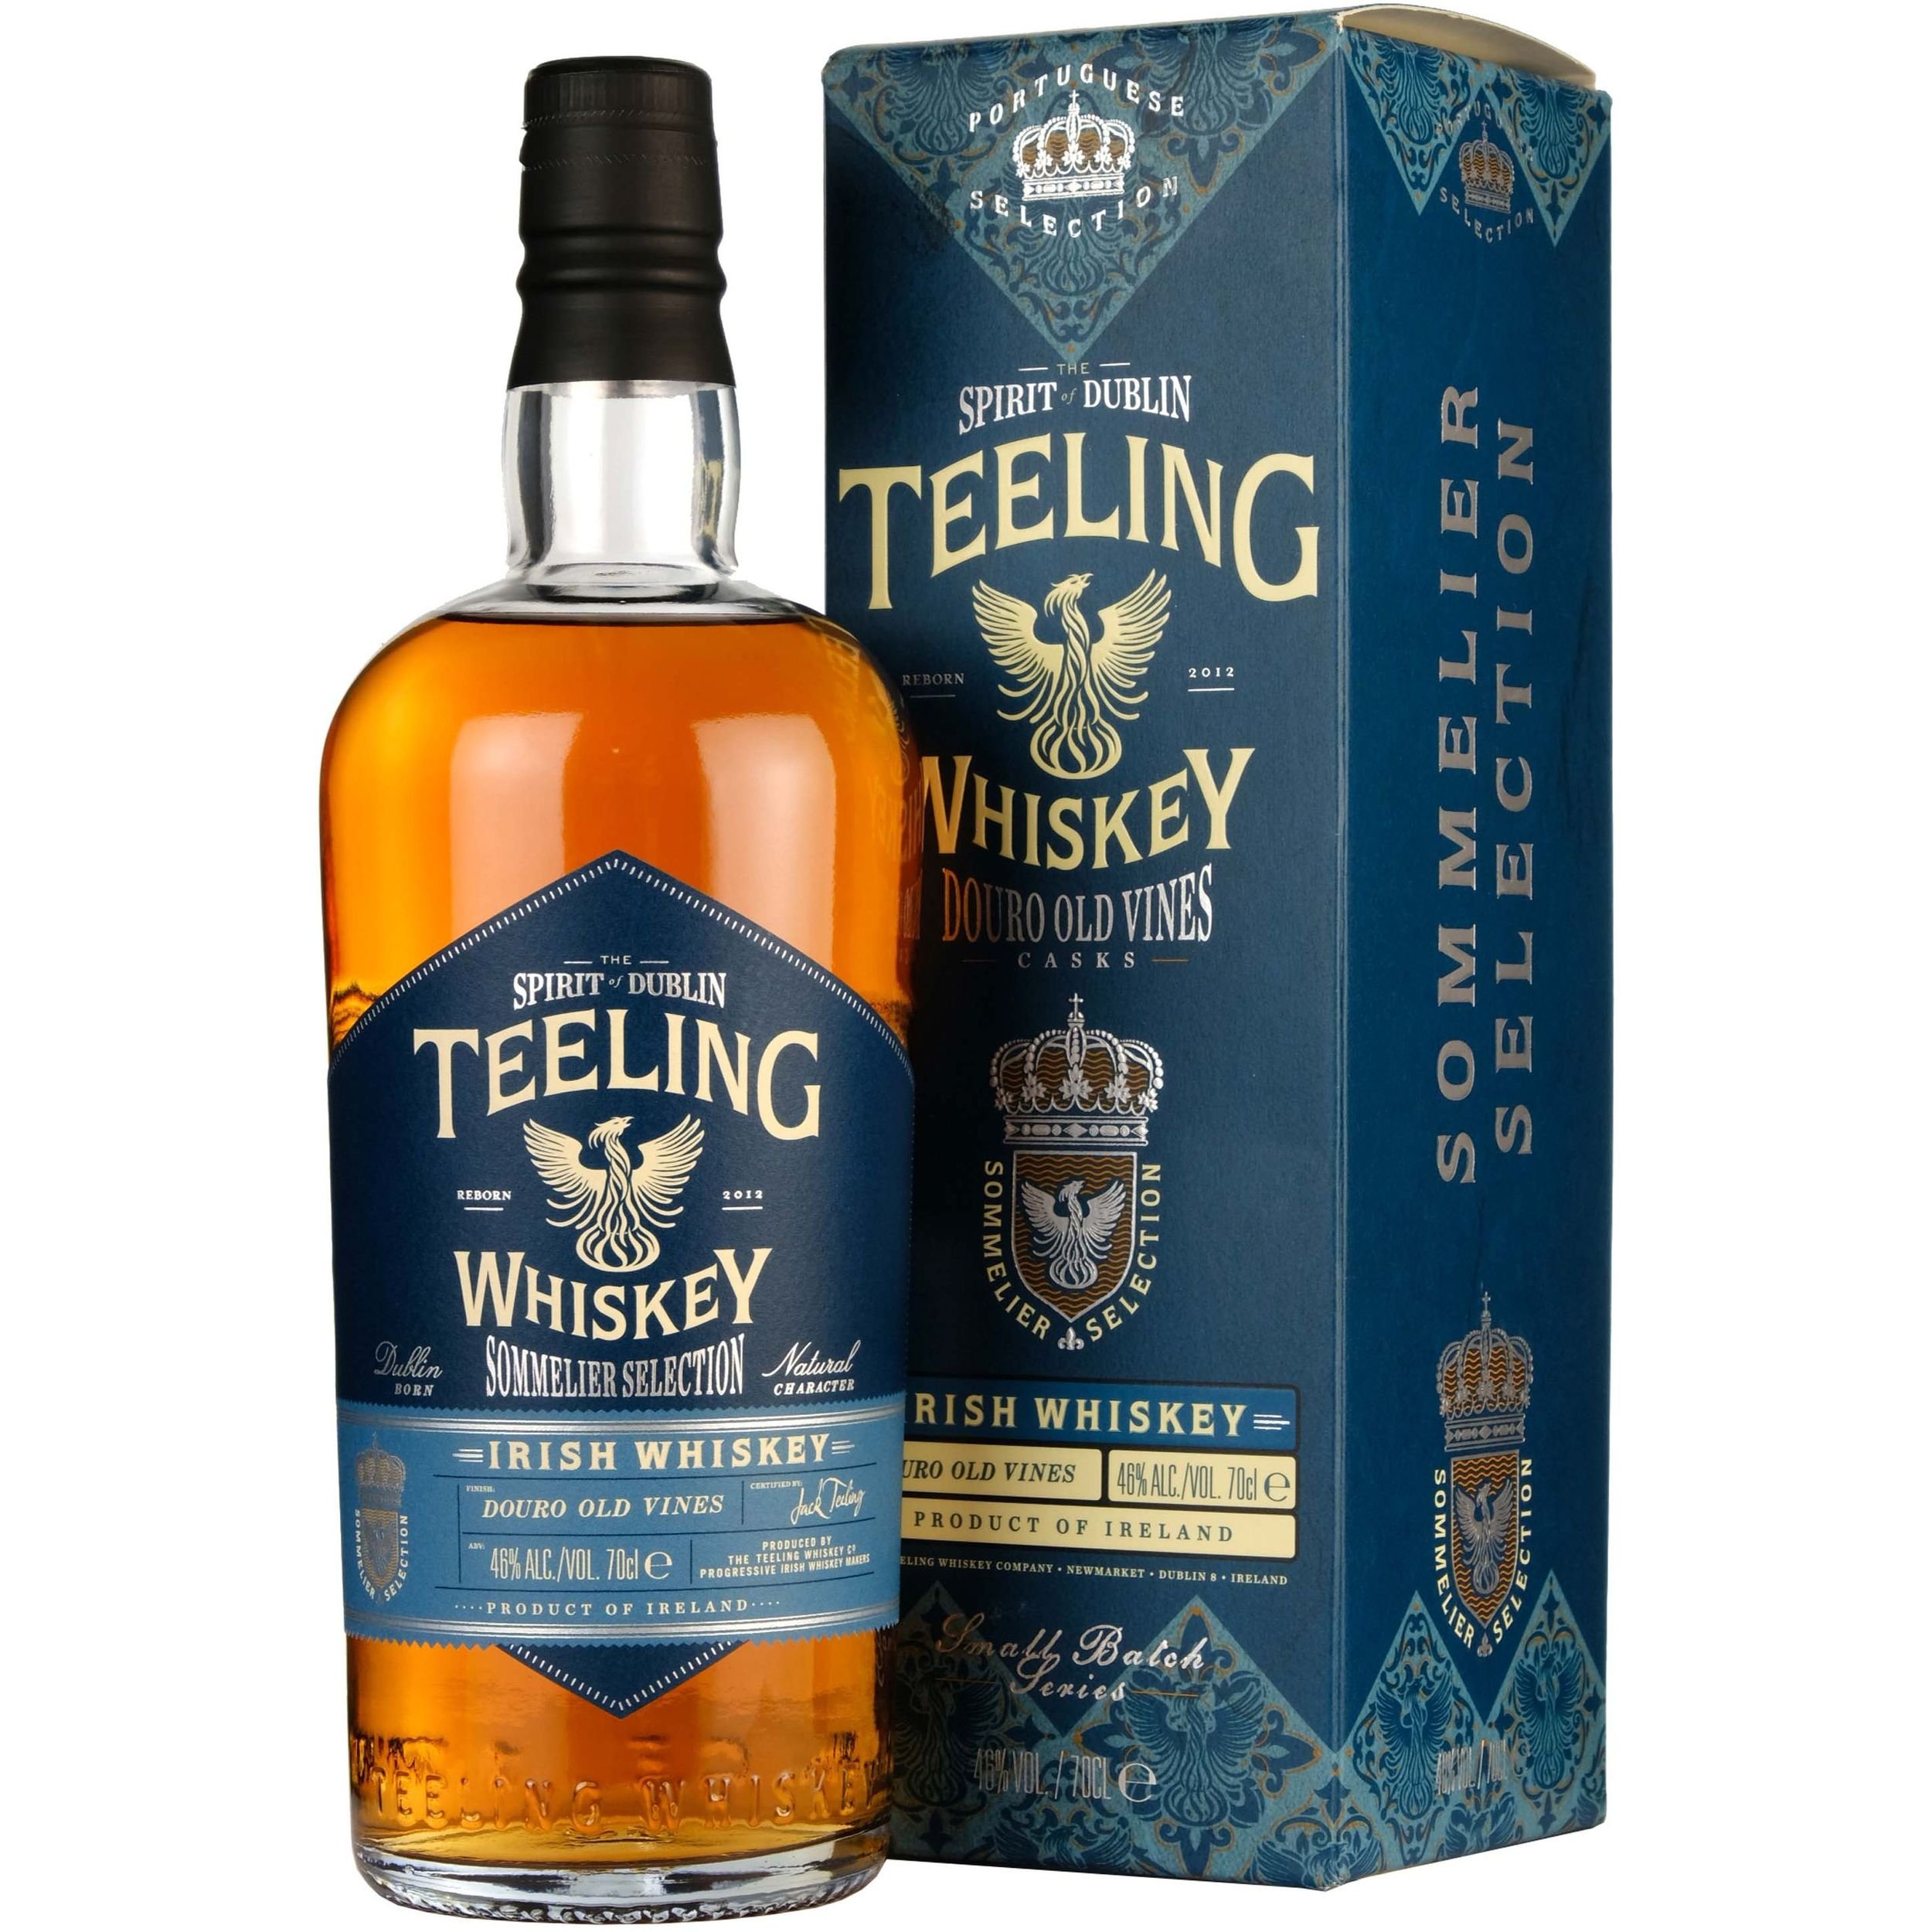 Віскі Teeling Douro Old Vines Casks Blended Irish Whiskey 46% 0.7 л, в подарунковій упаковці - фото 1